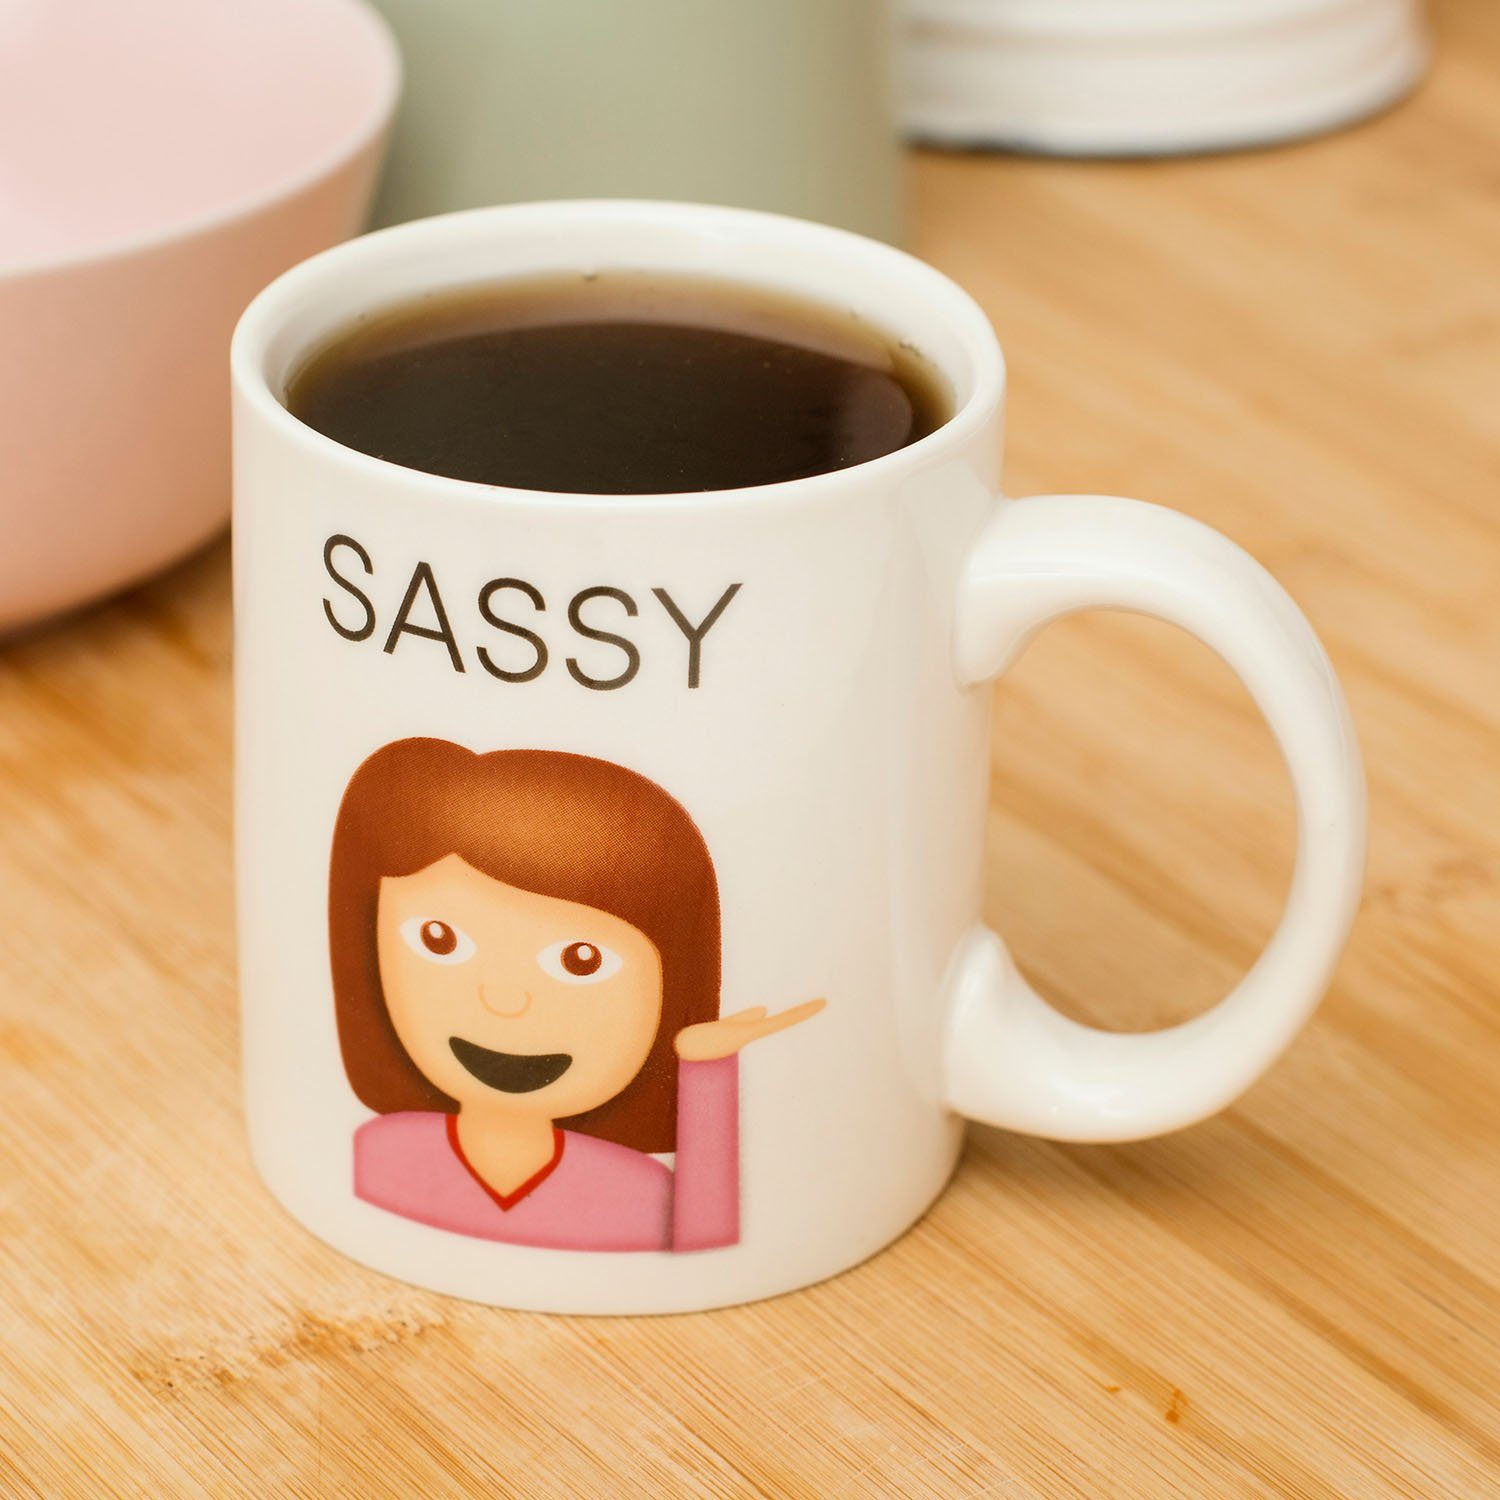 Thumbs Up Tasse Tasse Keramik Mug", "Sassy